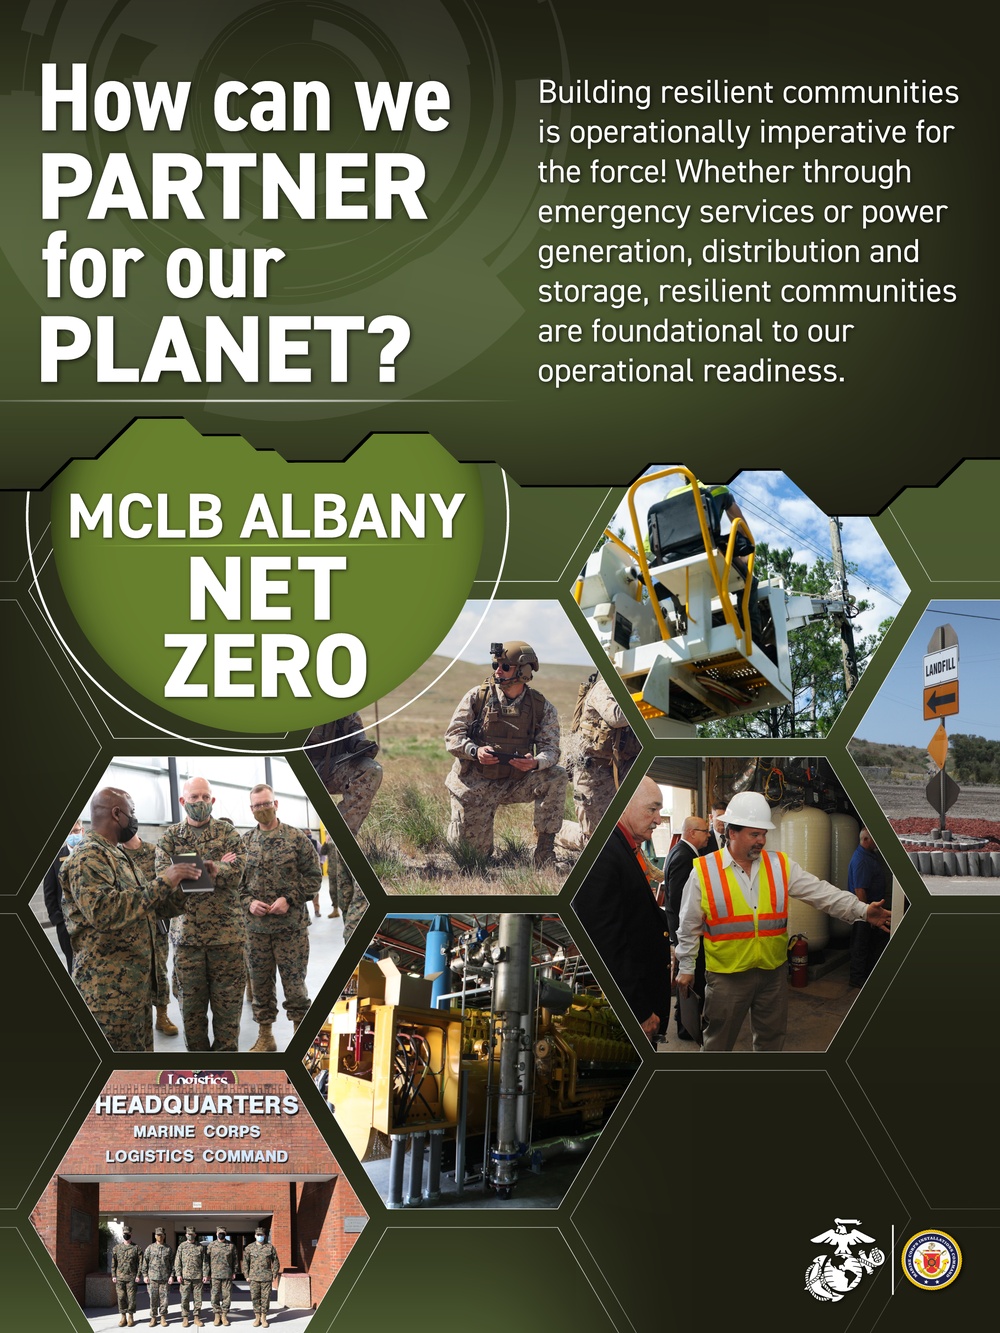 MCLB Albany Net Zero Poster